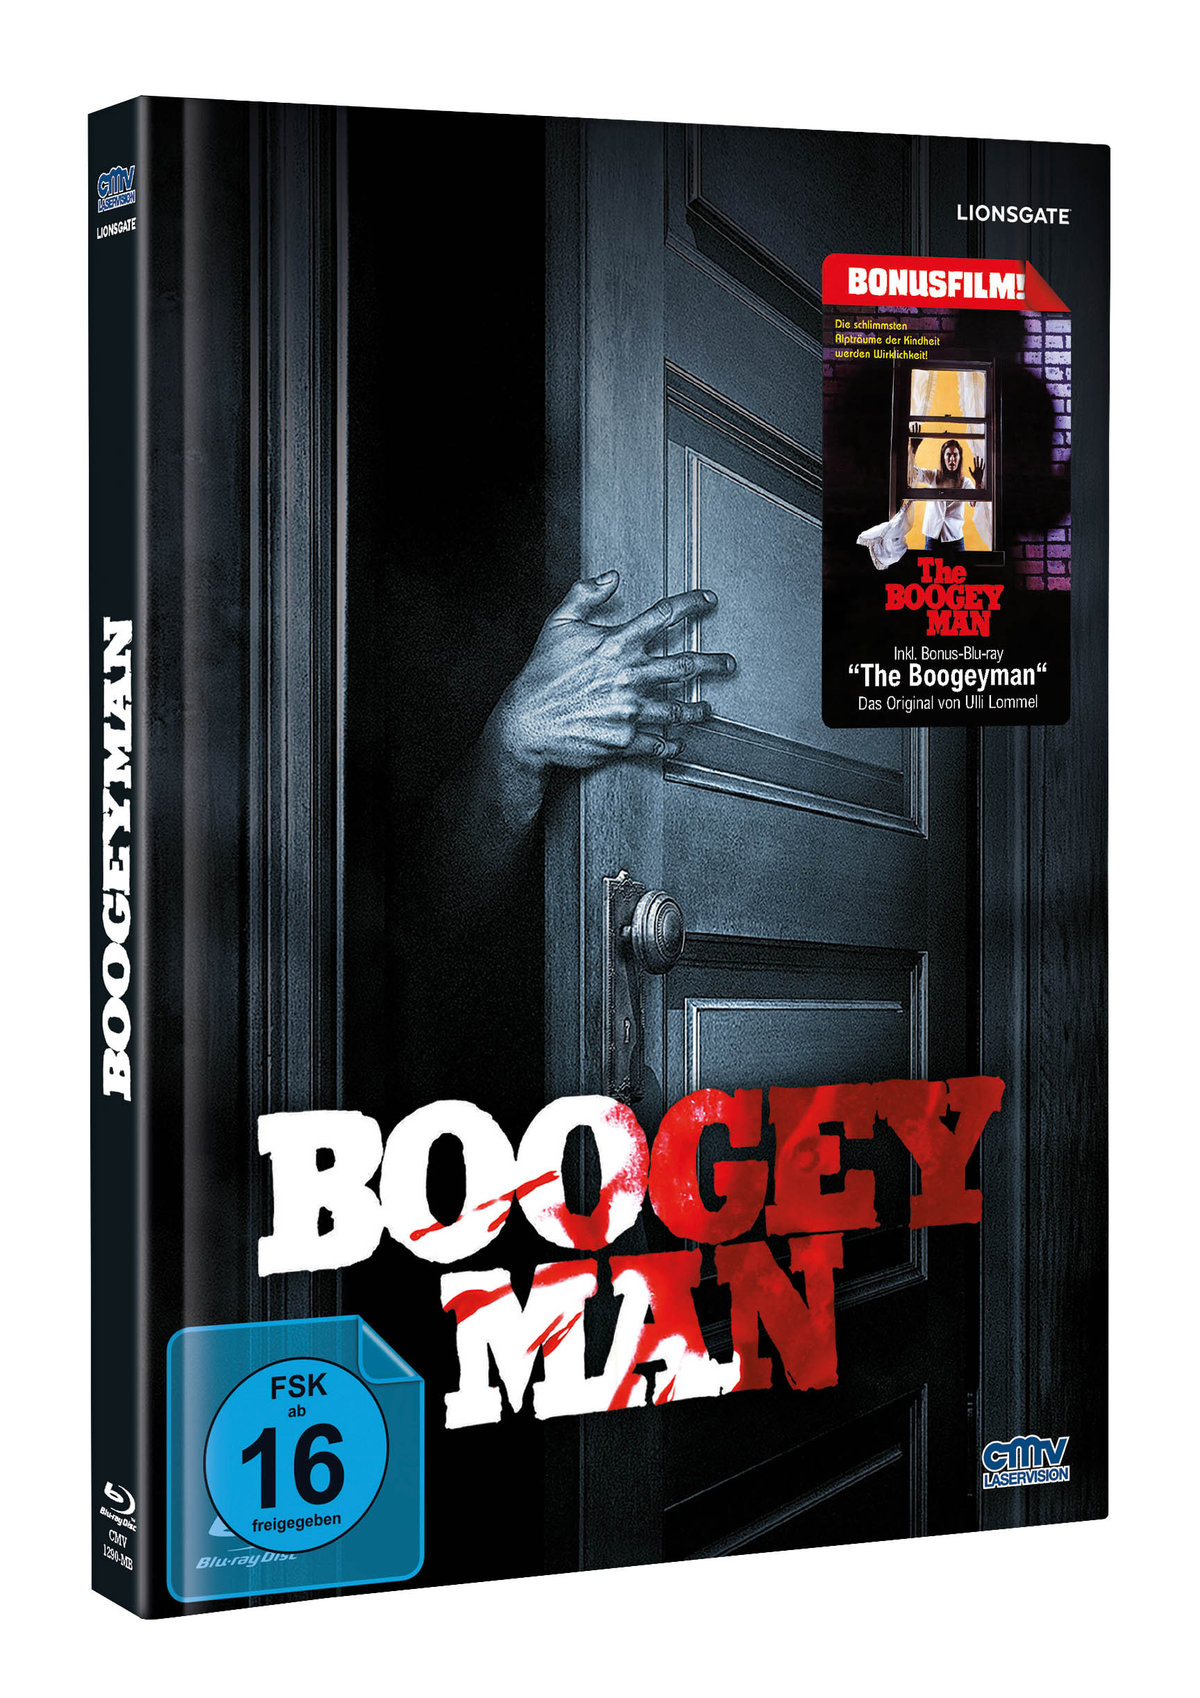 Boogeyman - Der schwarze Mann - Uncut Mediabook Edition (blu-ray) (A)